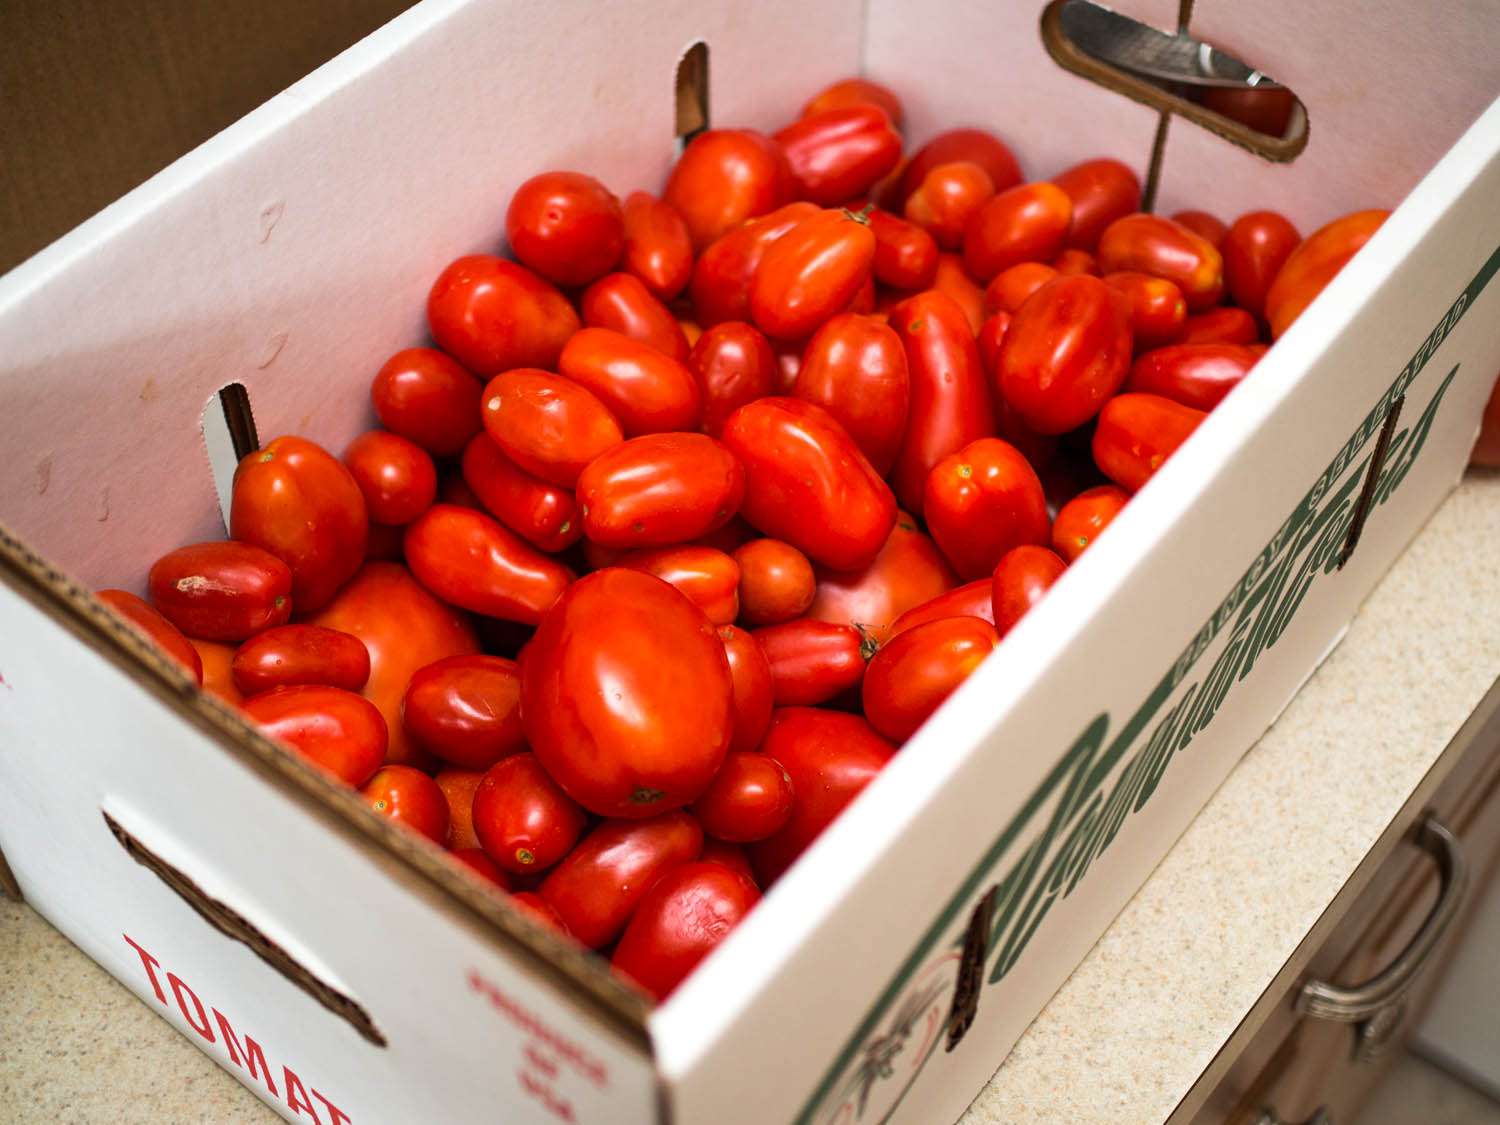 A cardboard carton of plum tomatoes.